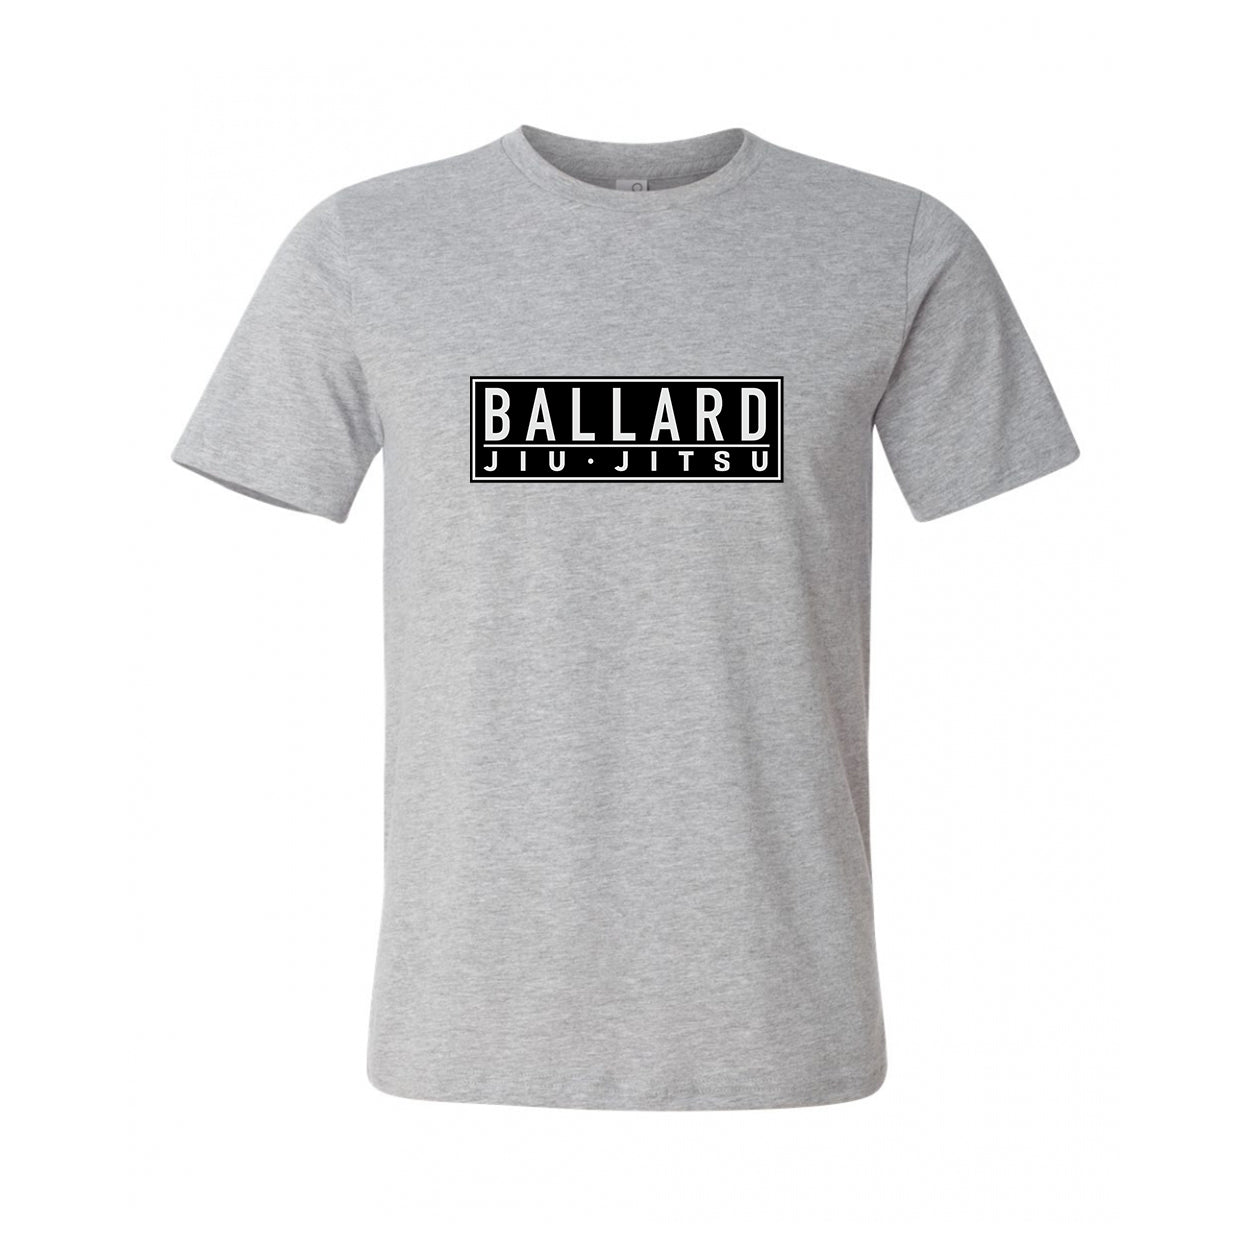 Ballard Jiu Jitsu Bridge T-shirt